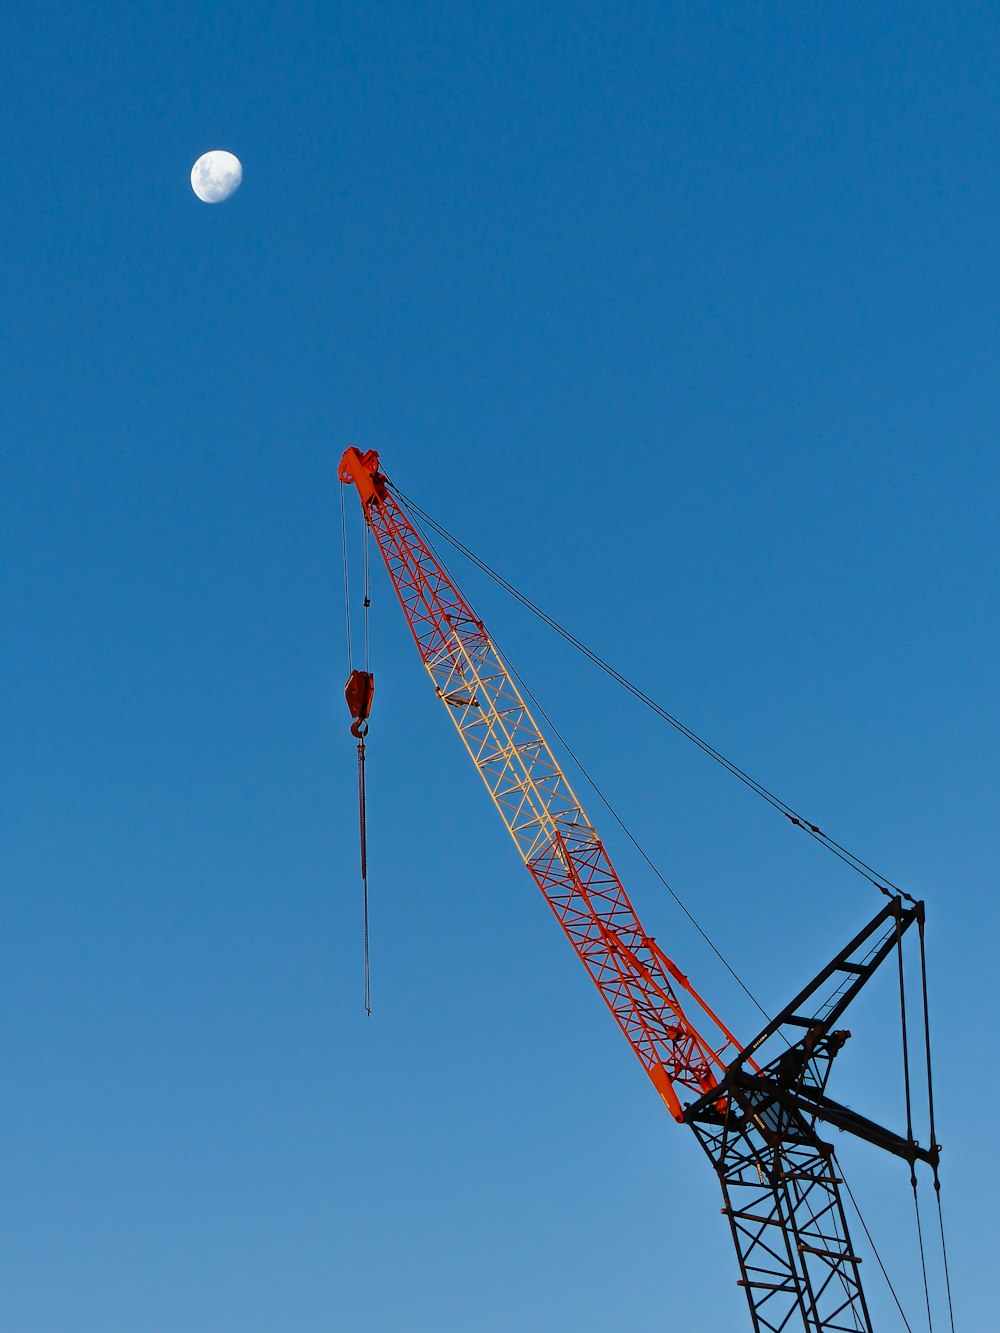 red crane under blue sky during daytime